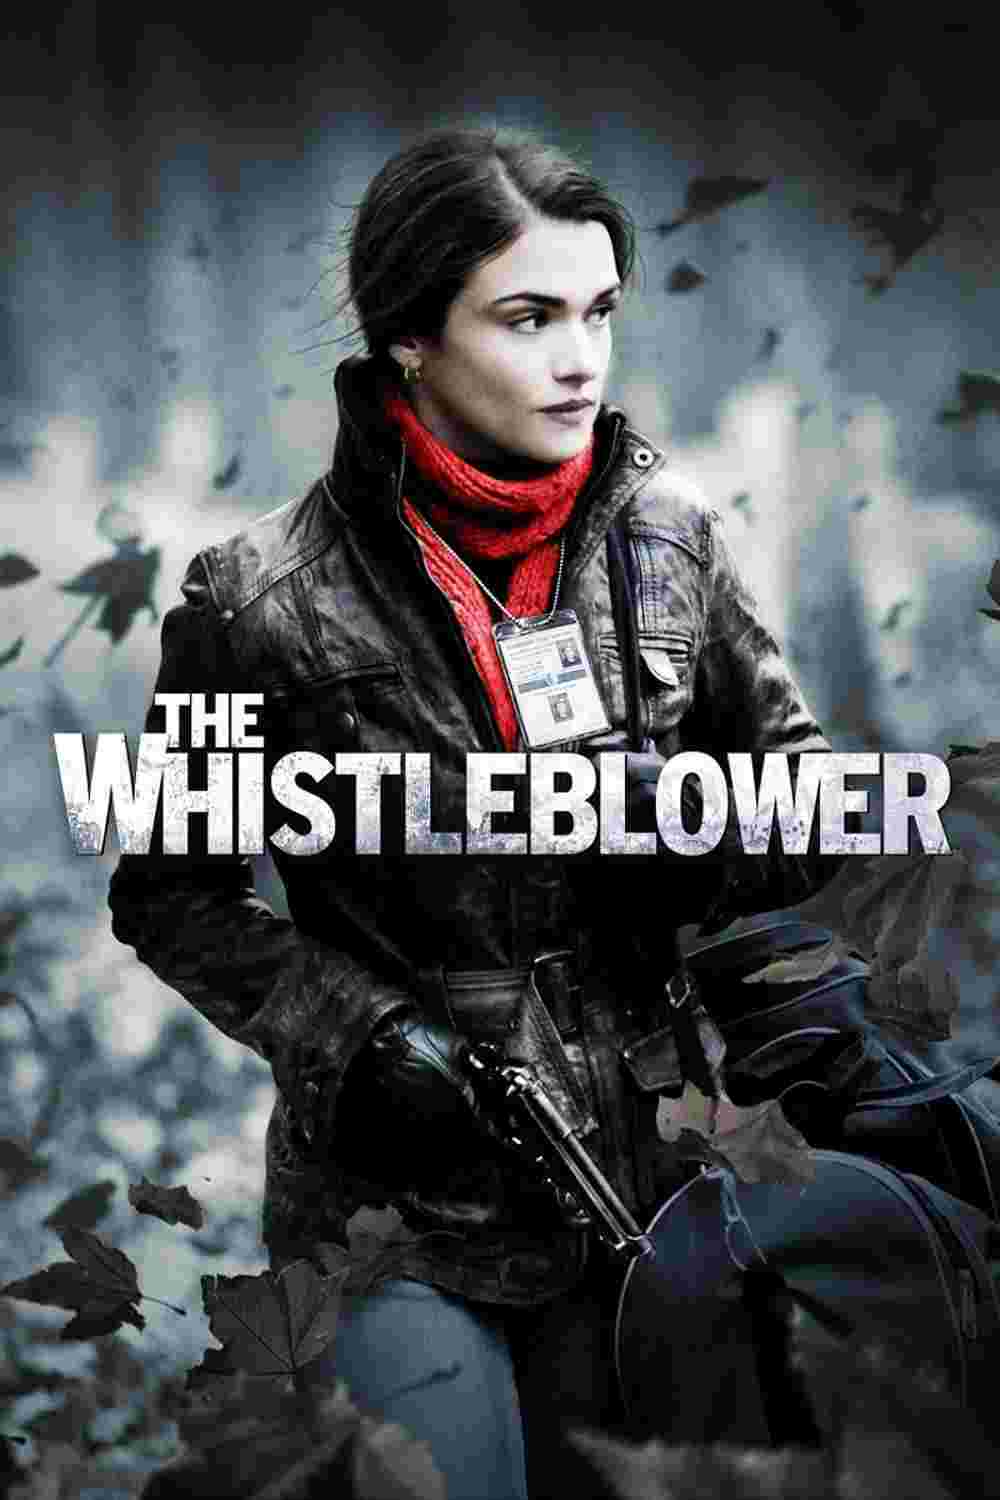 The Whistleblower (2010) Rachel Weisz